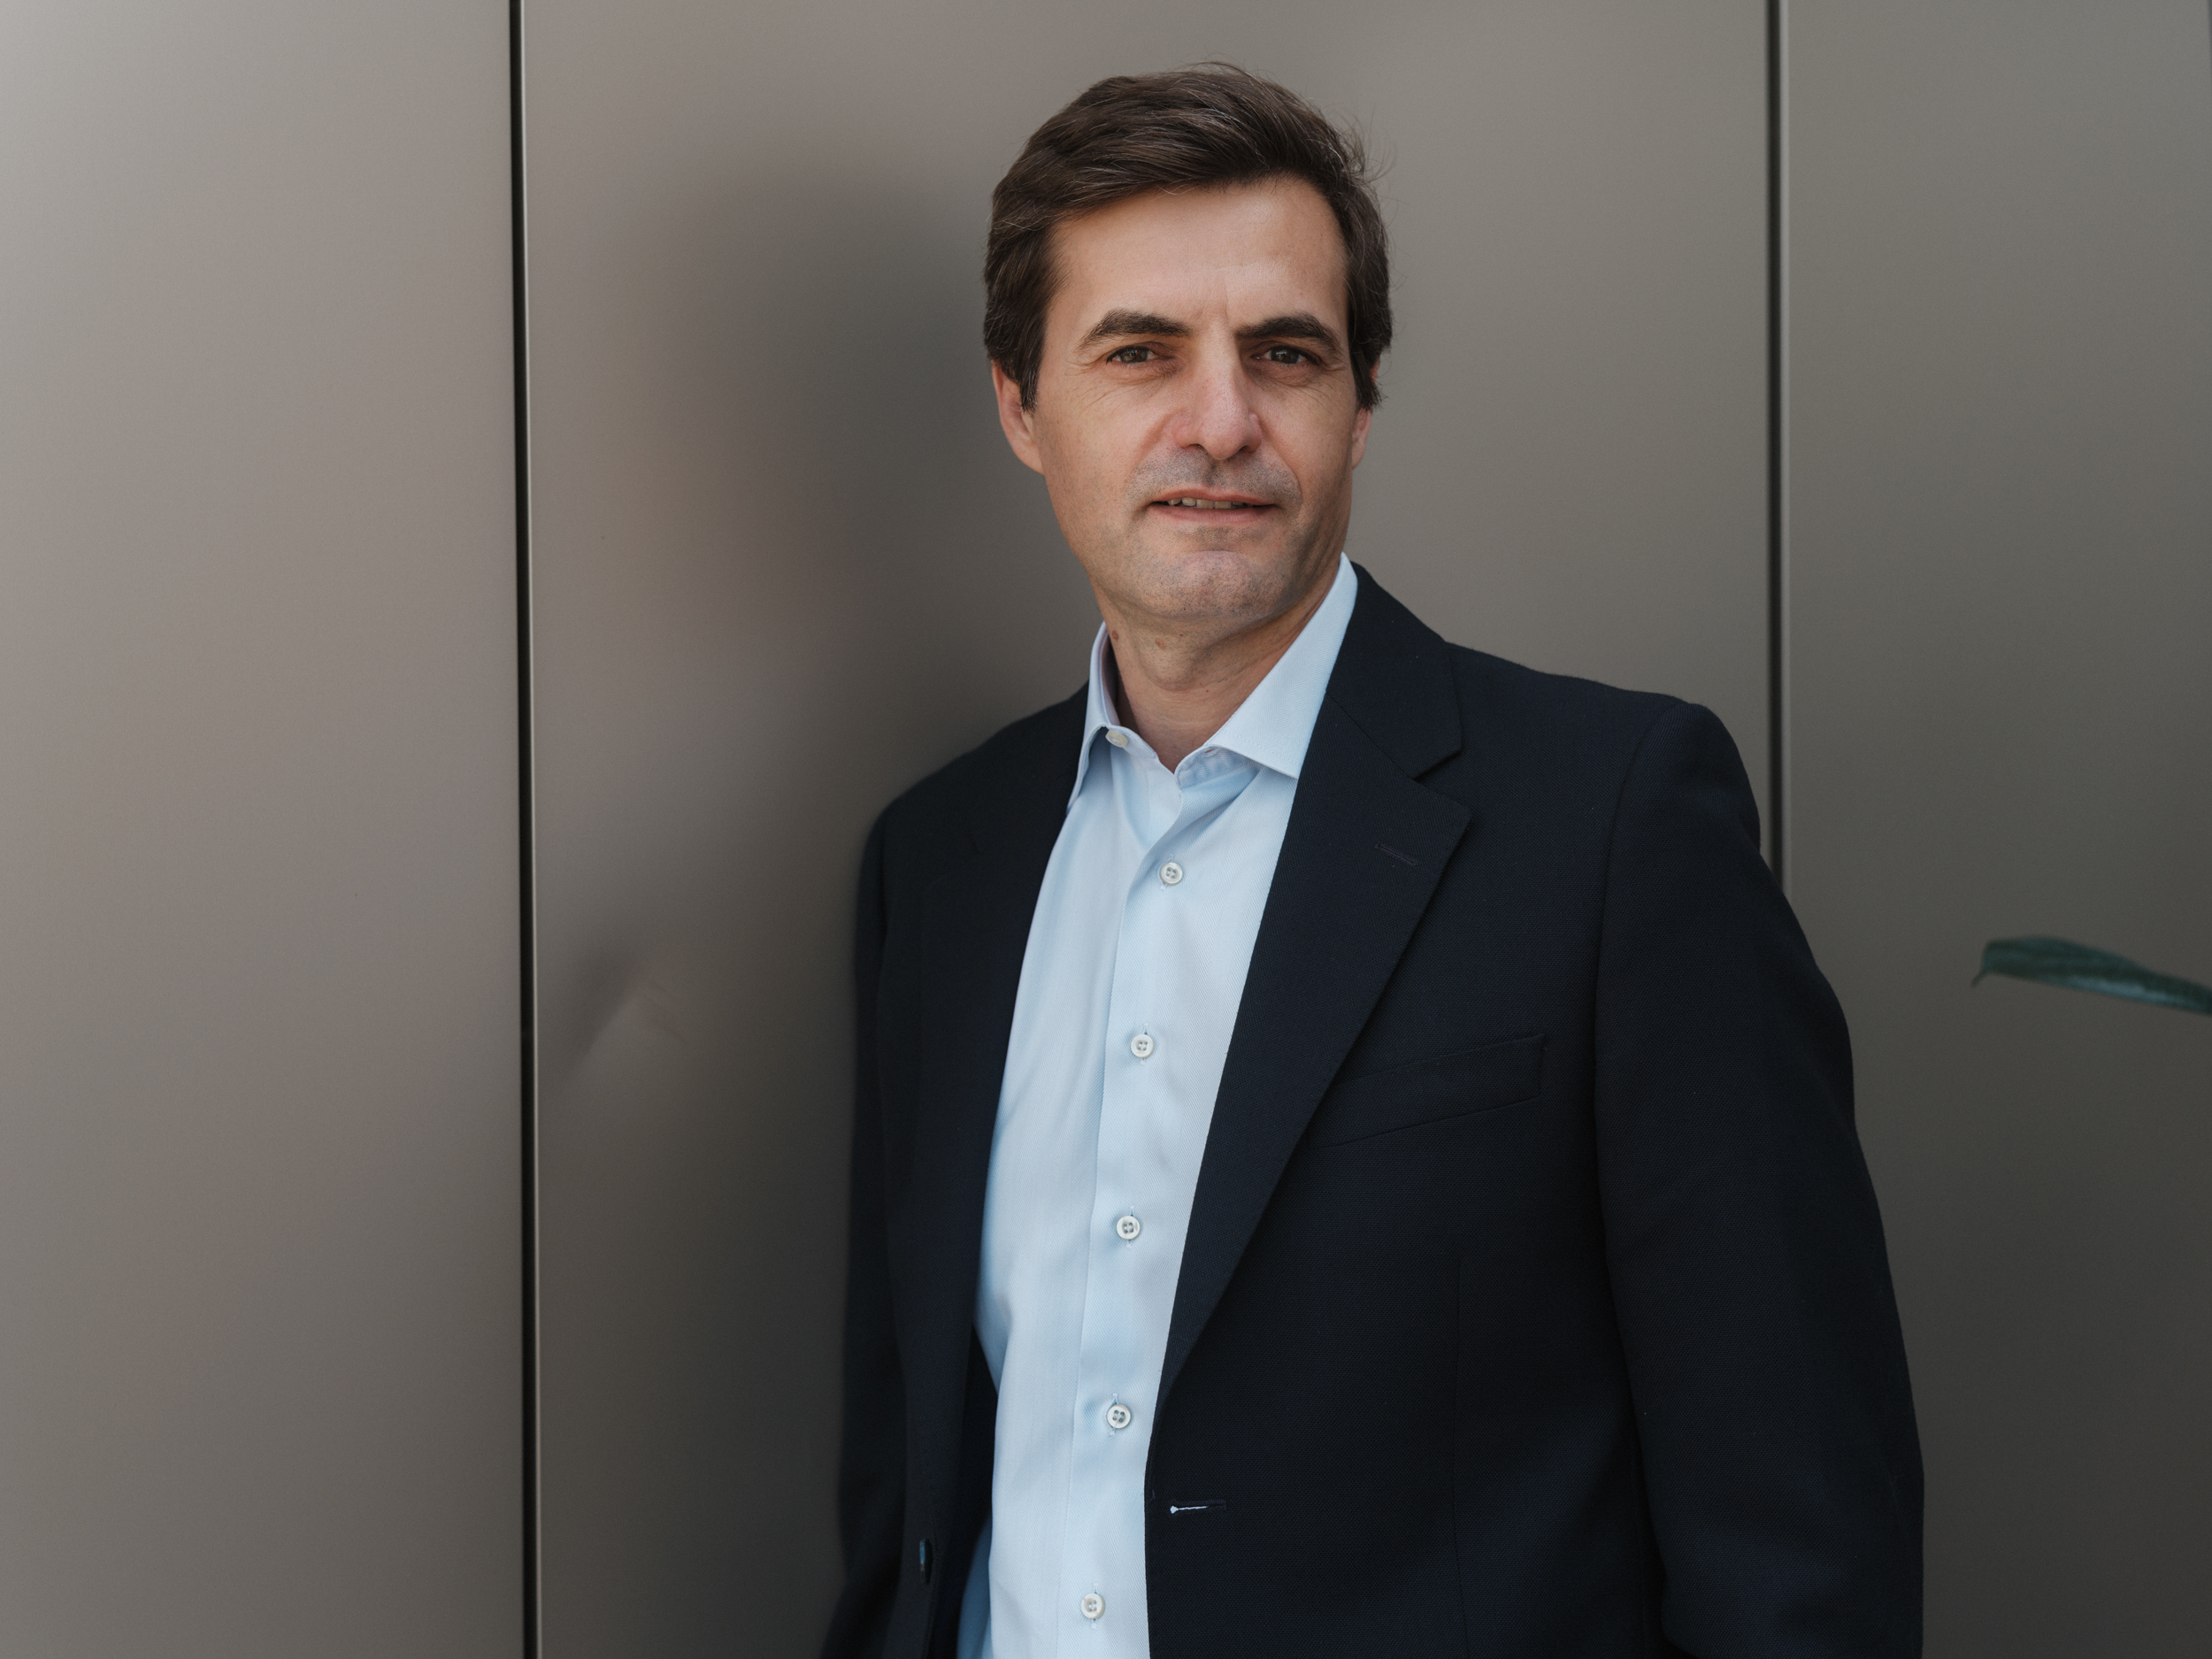 Javier Aranguren, Chief Investment Officer at Intrum